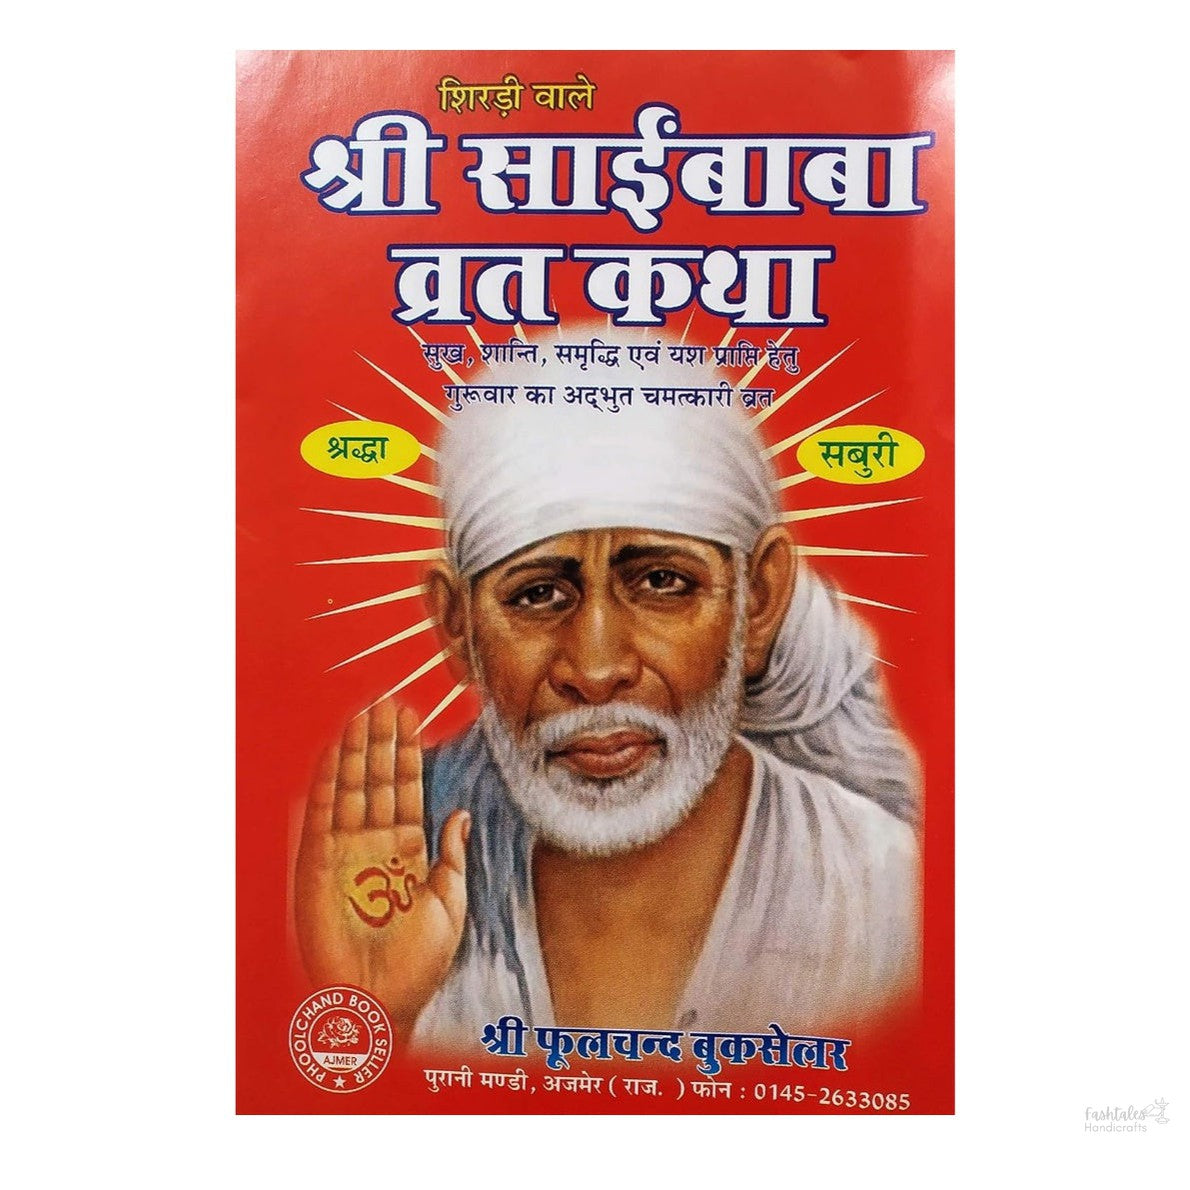 Sai baba vrat katha set of 11 books